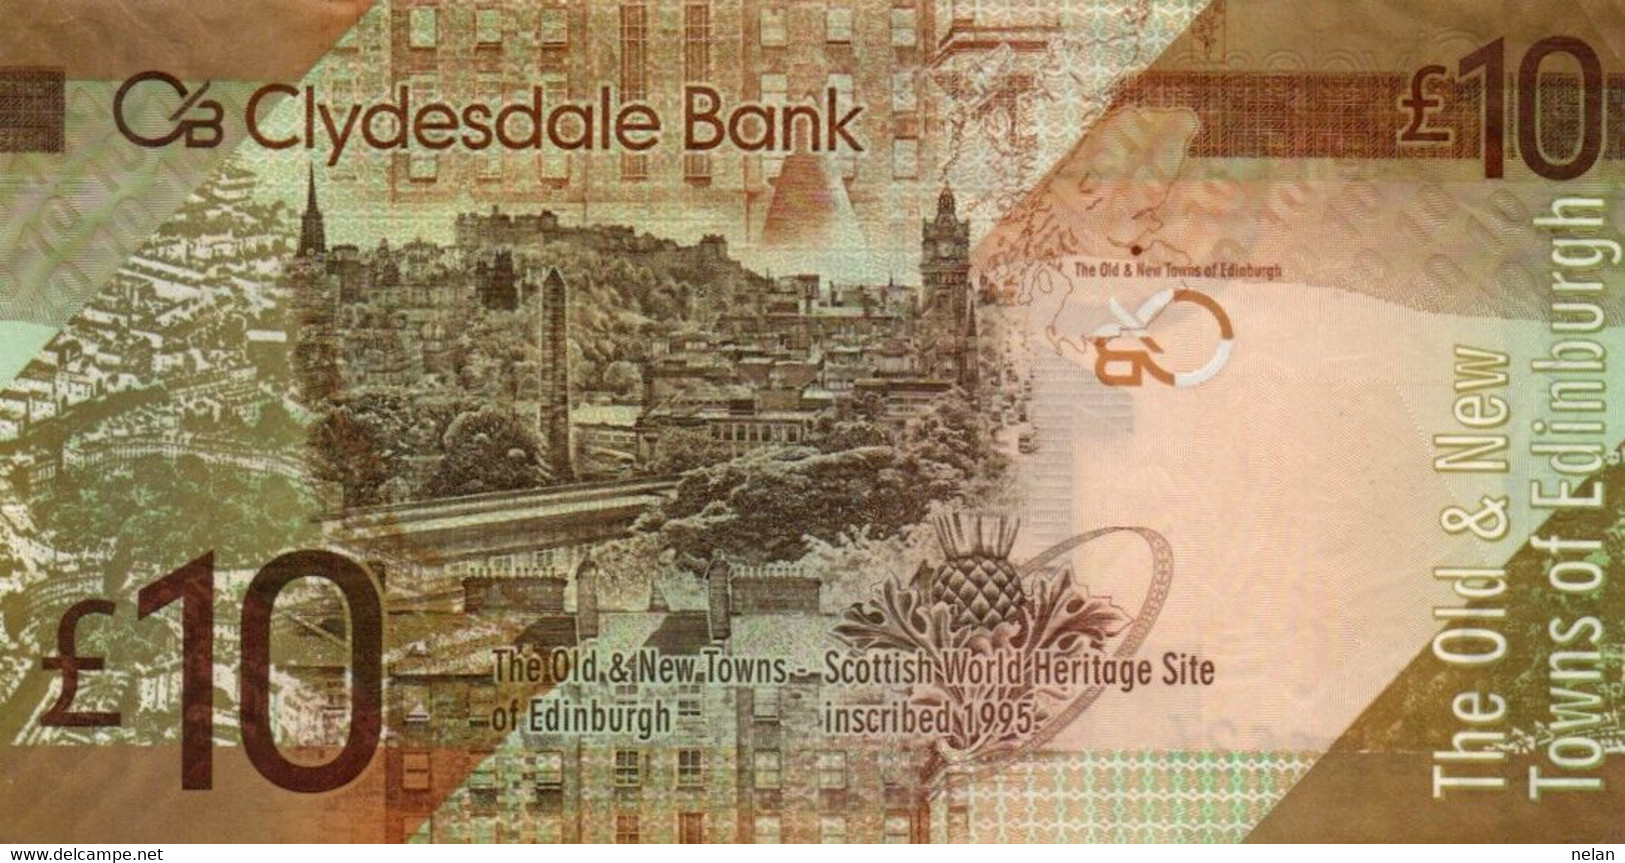 Bank Of Scotland  - SCOTLAND-TEN  POUNDS STERLING  2009  AUNC++ P-229 - 10 Pounds